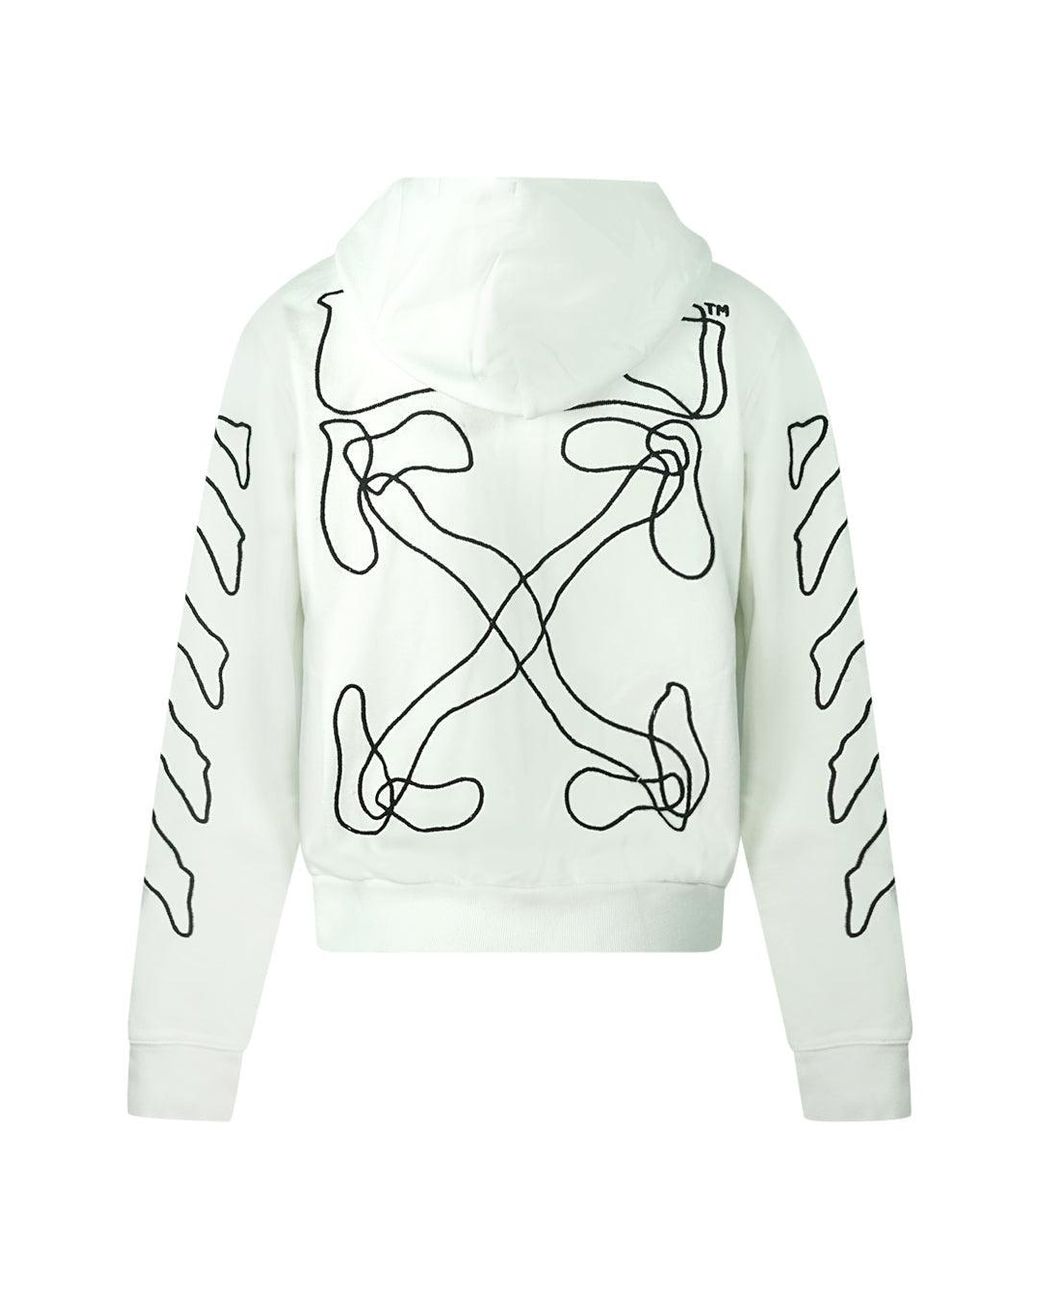 Off white c.o virgil abloh shirt, hoodie, longsleeve, sweater